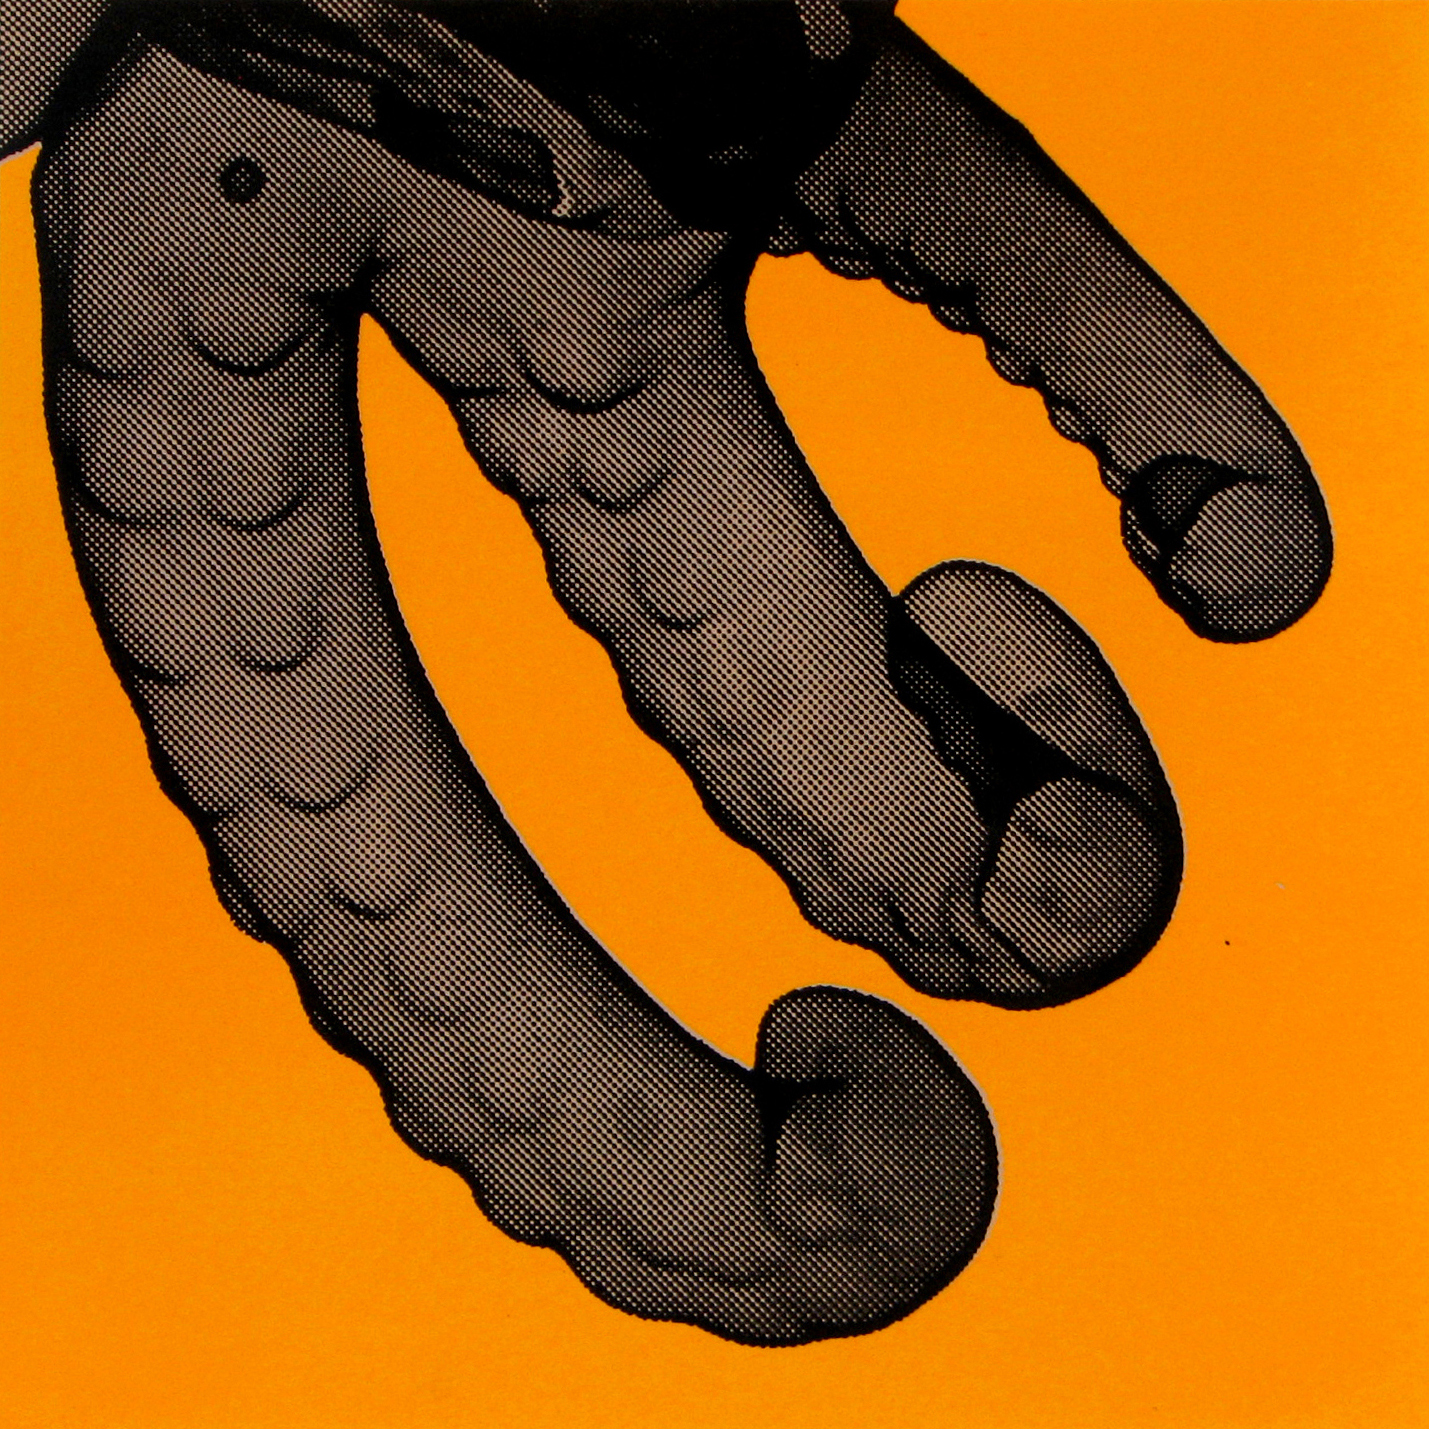 Copy of Erica Seccombe, Tentacles (orange) 2007. 